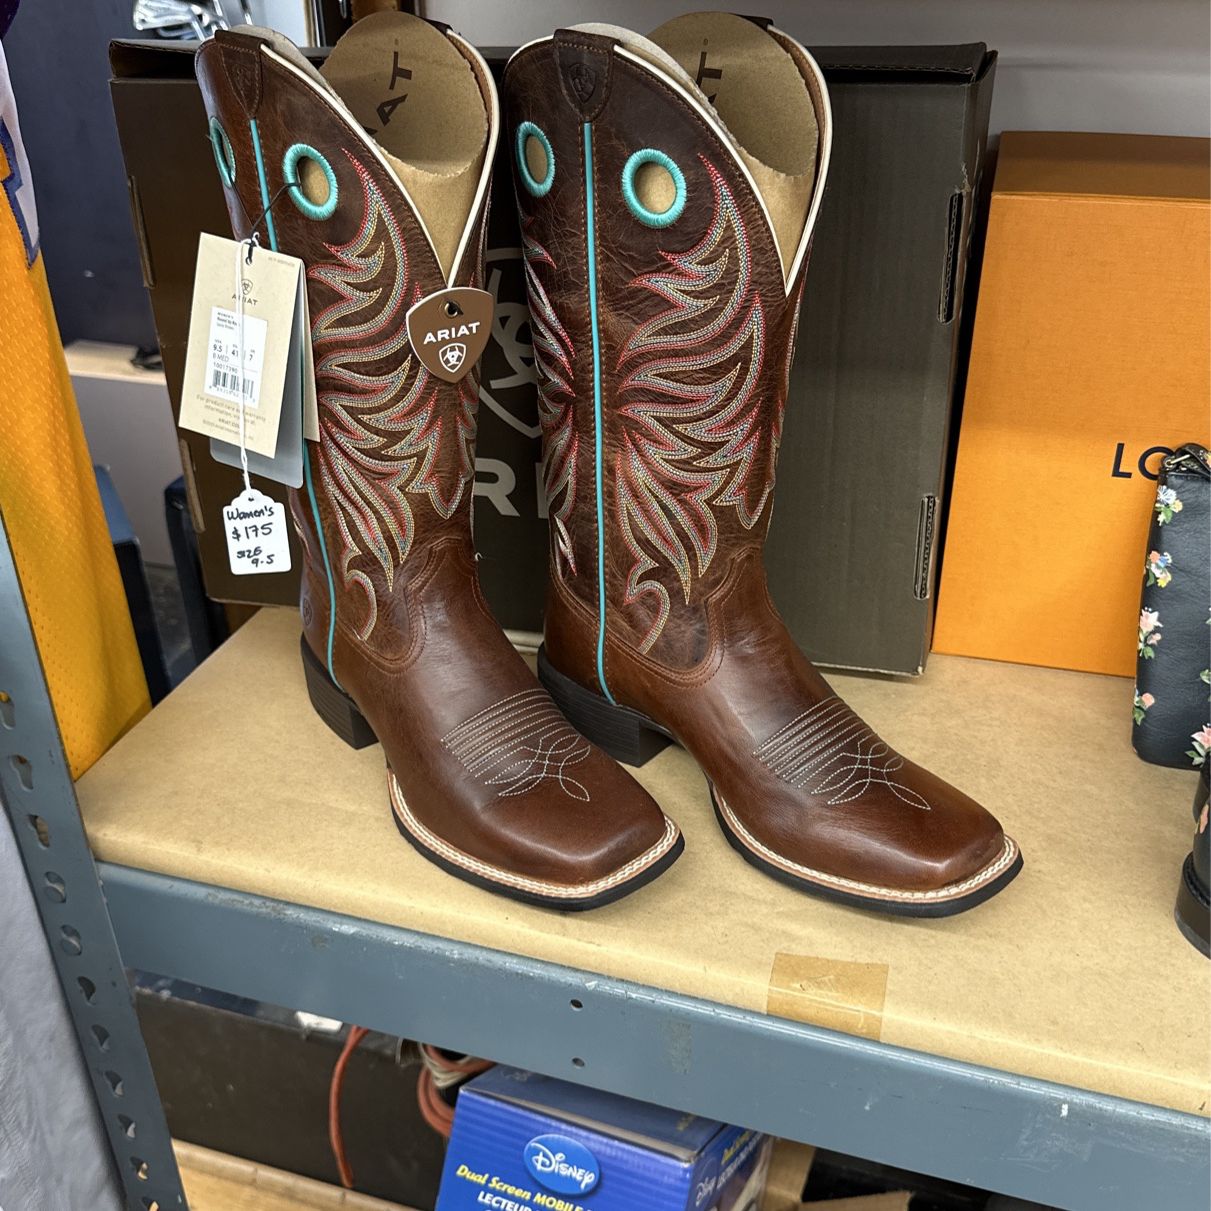 Ariat Women’s Cowboy Boots Size 9.5 New